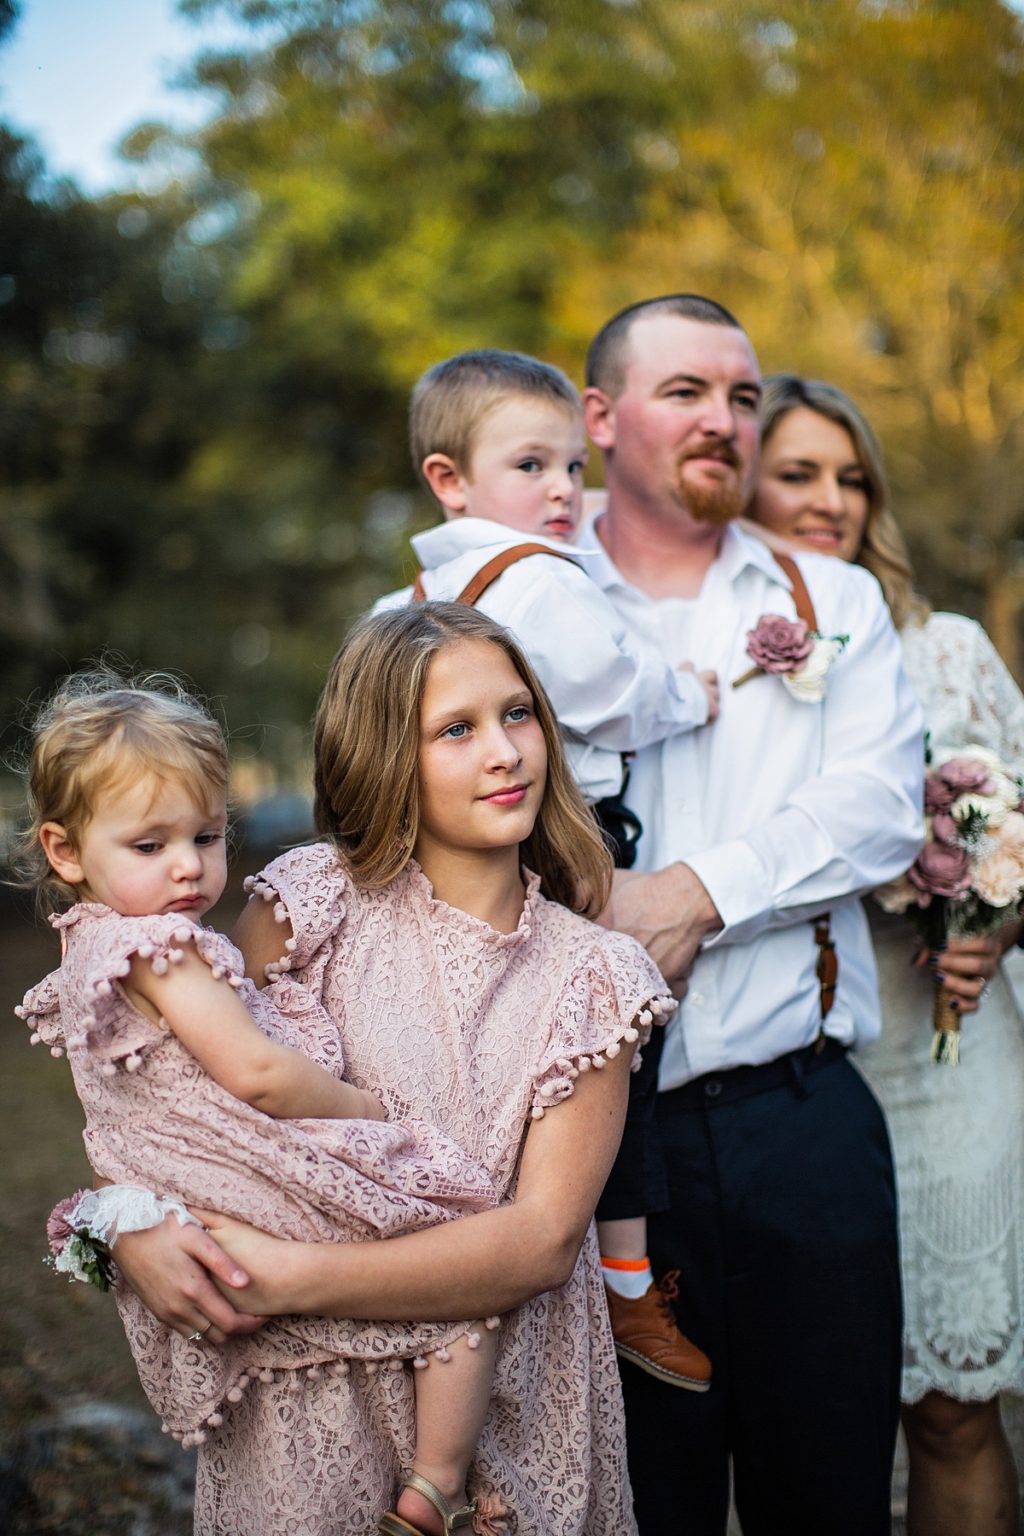 Orlando Elopement Photographer // A family wedding shoot at Moss Park